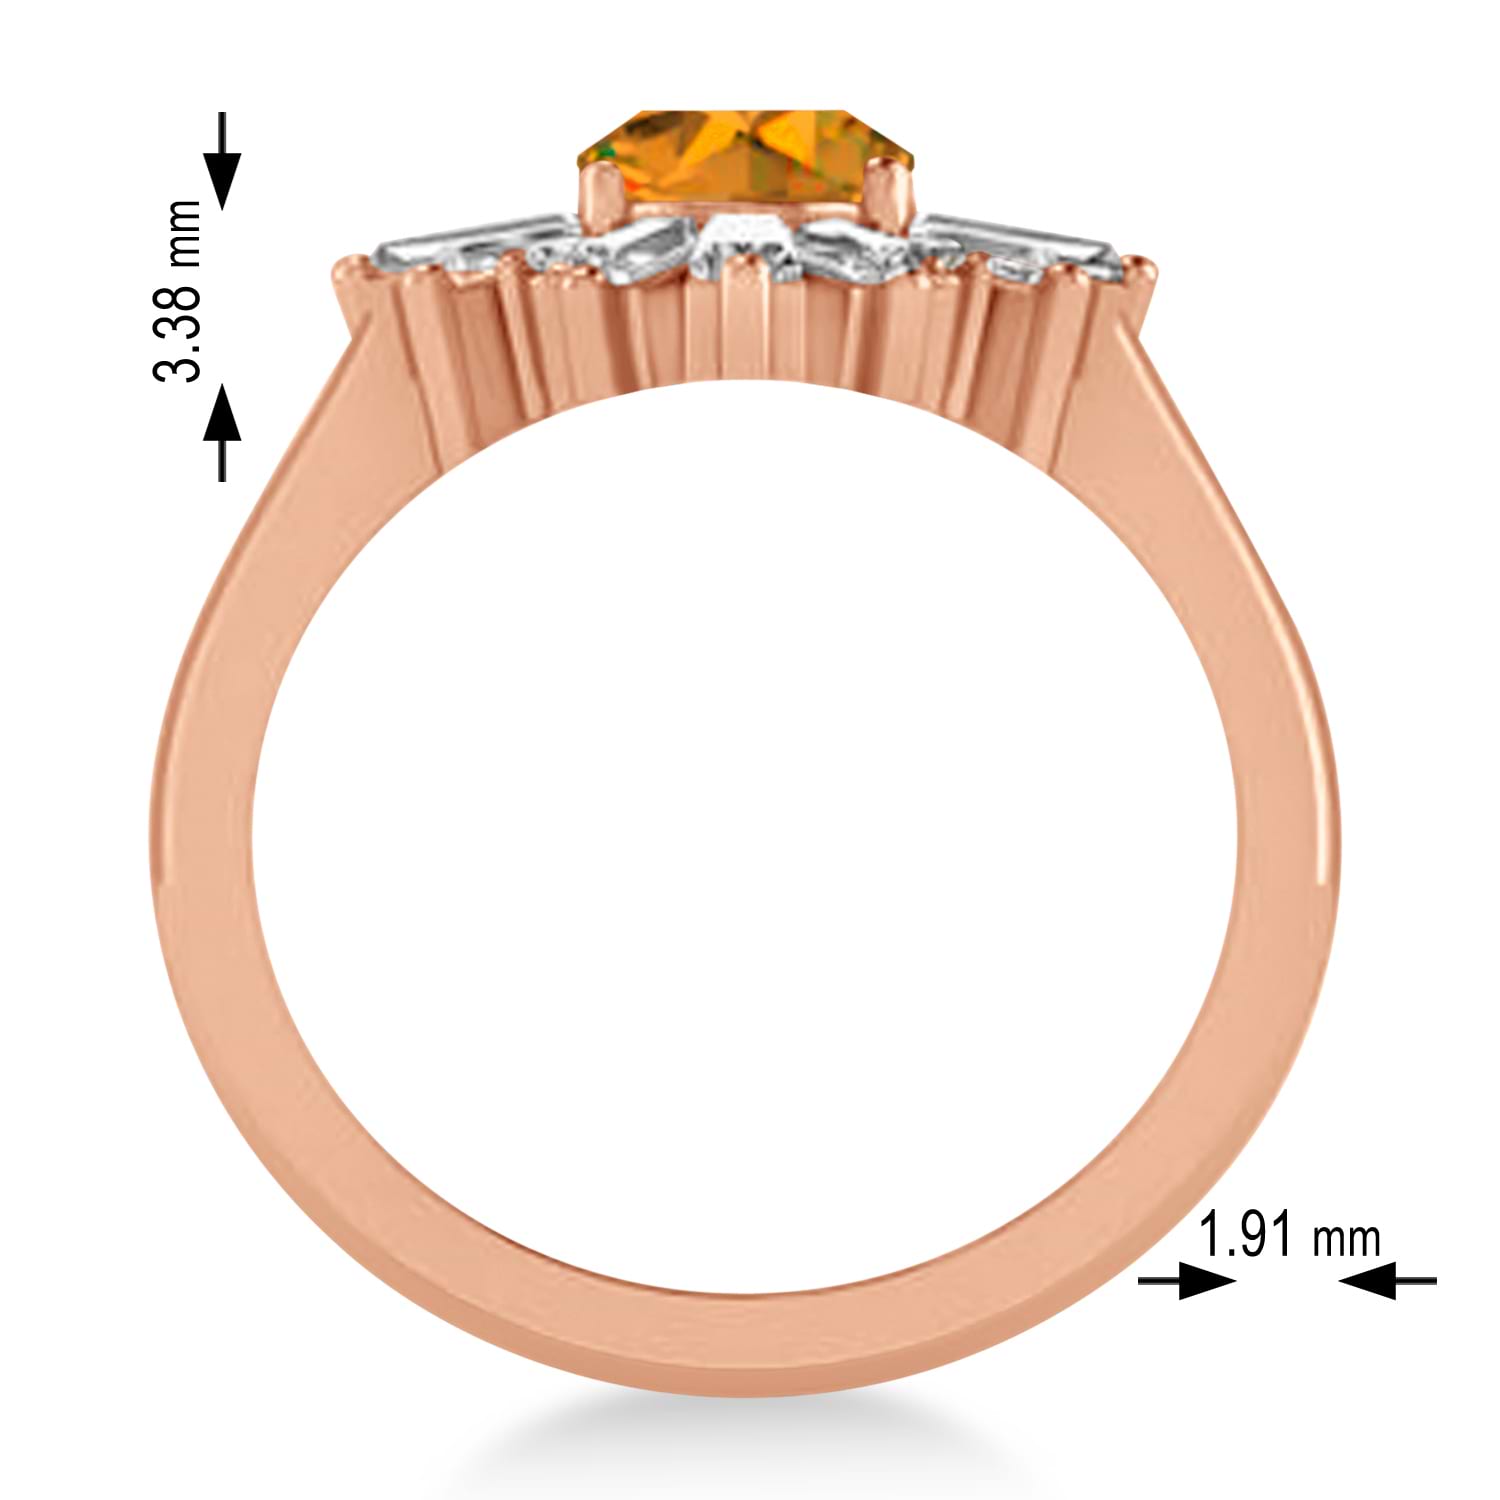 Citrine & Diamond Oval Cut Ballerina Engagement Ring 18k Rose Gold (3.06 ctw)